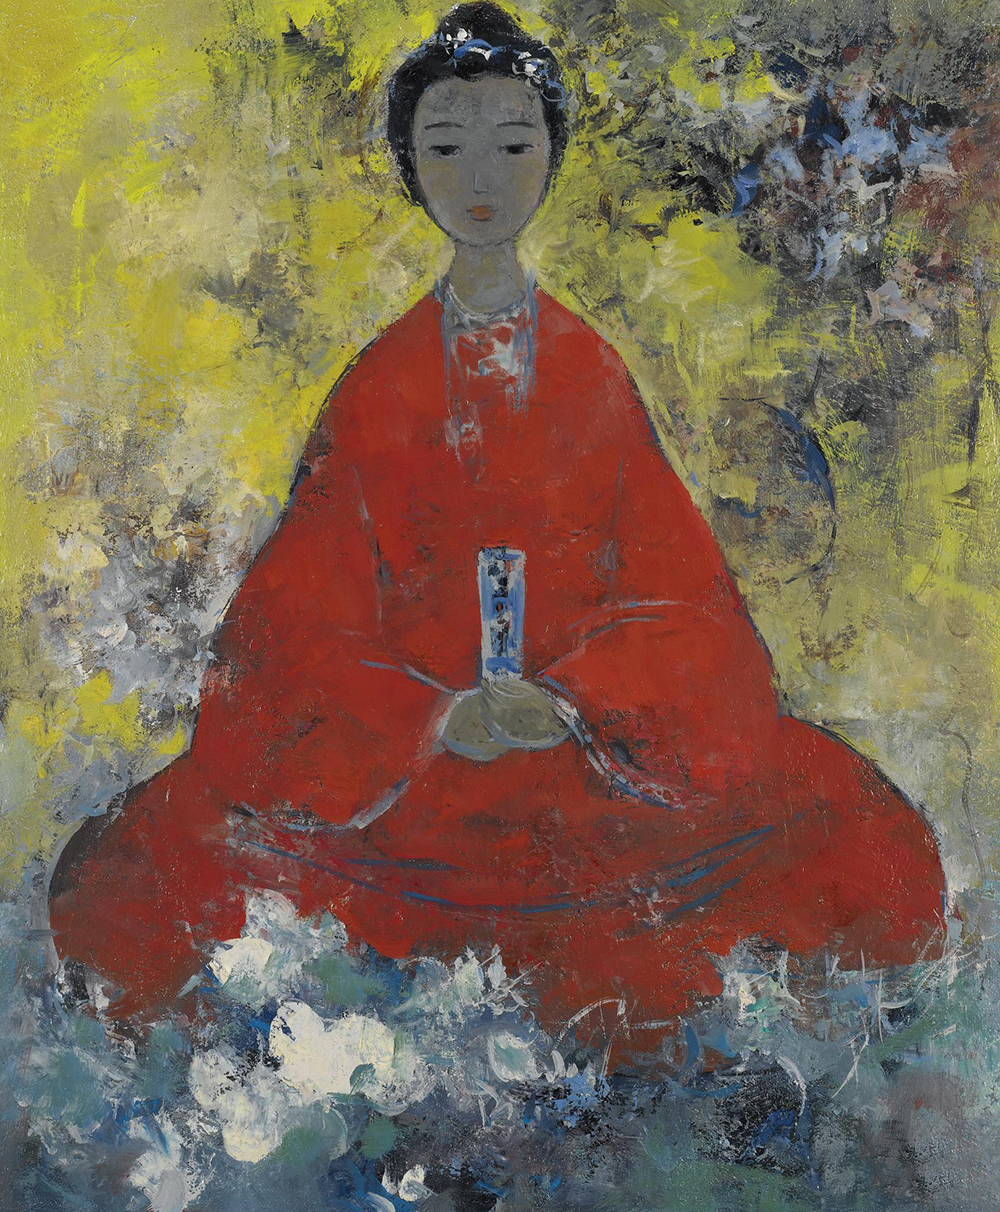 Buddhist Buddha painting on canvas BUD0144